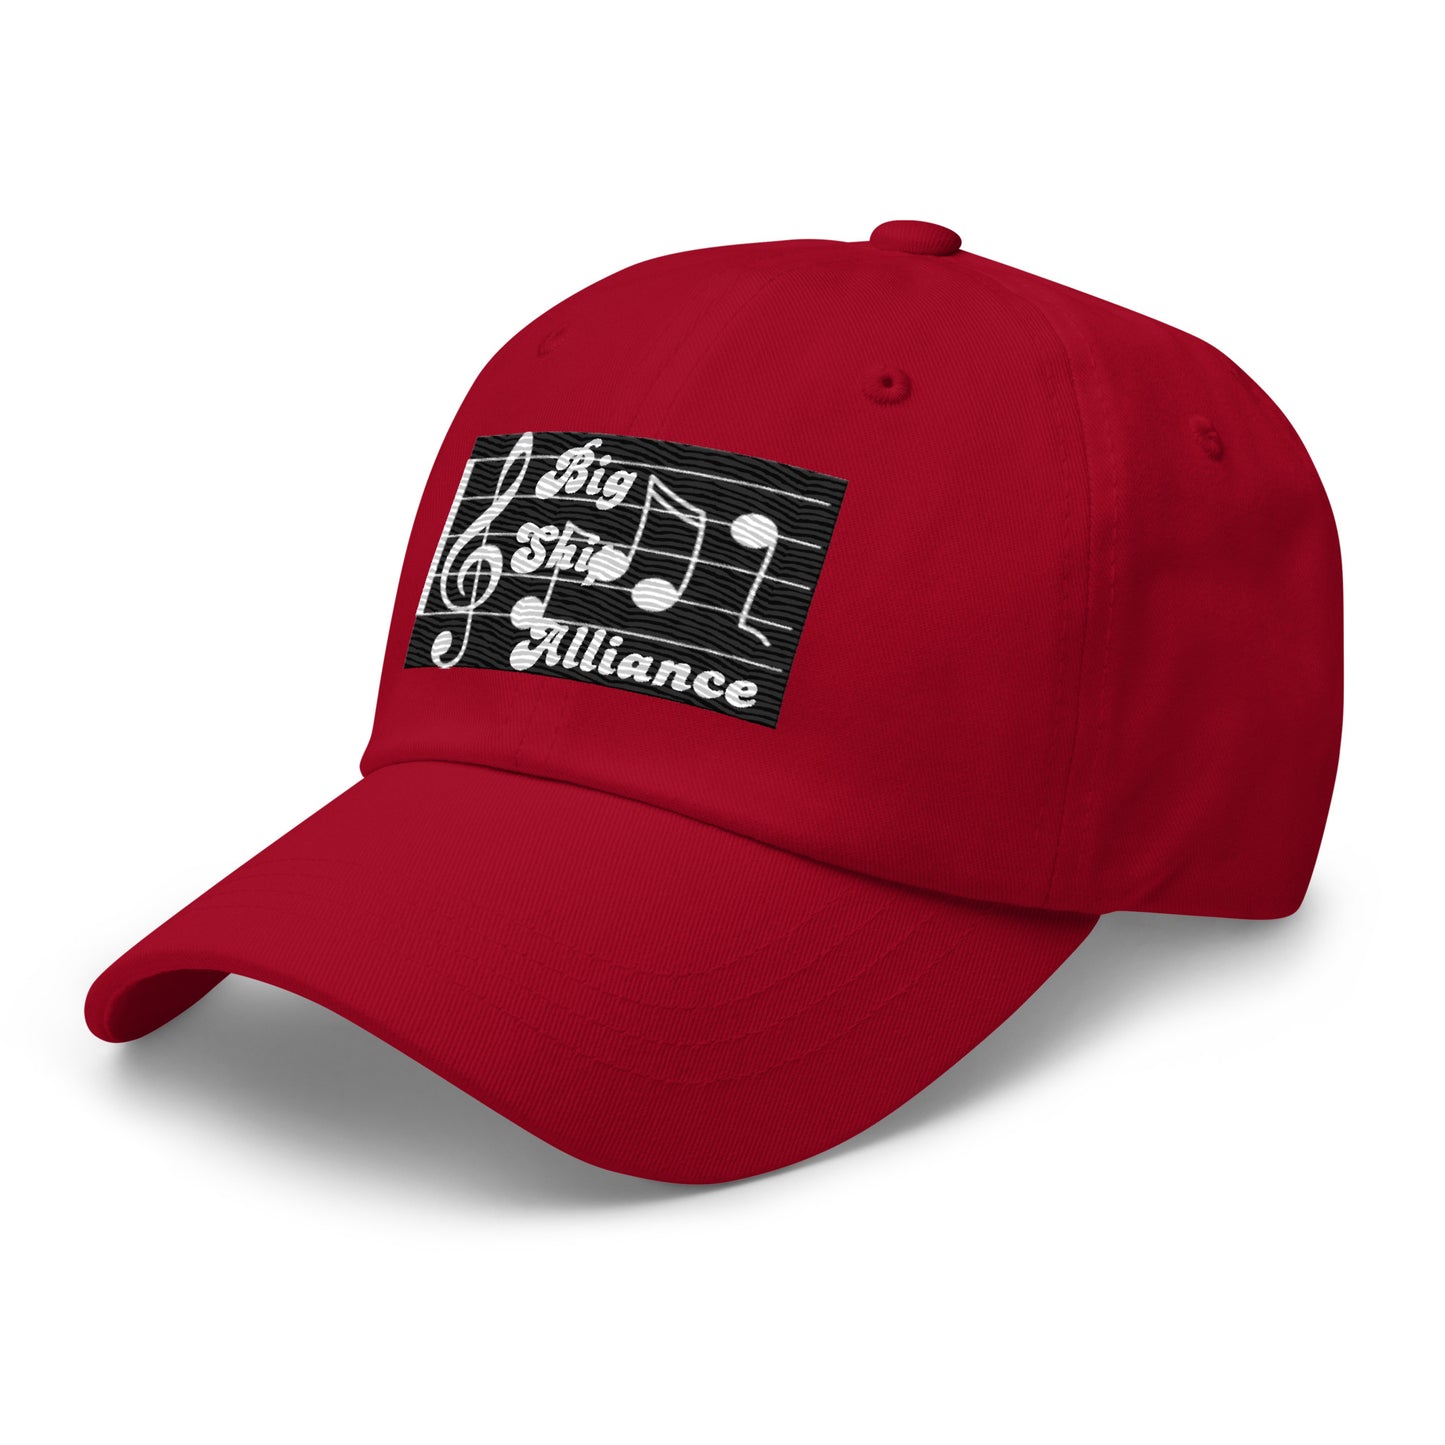 Embroidered Dad hat - Big Ship Alliance